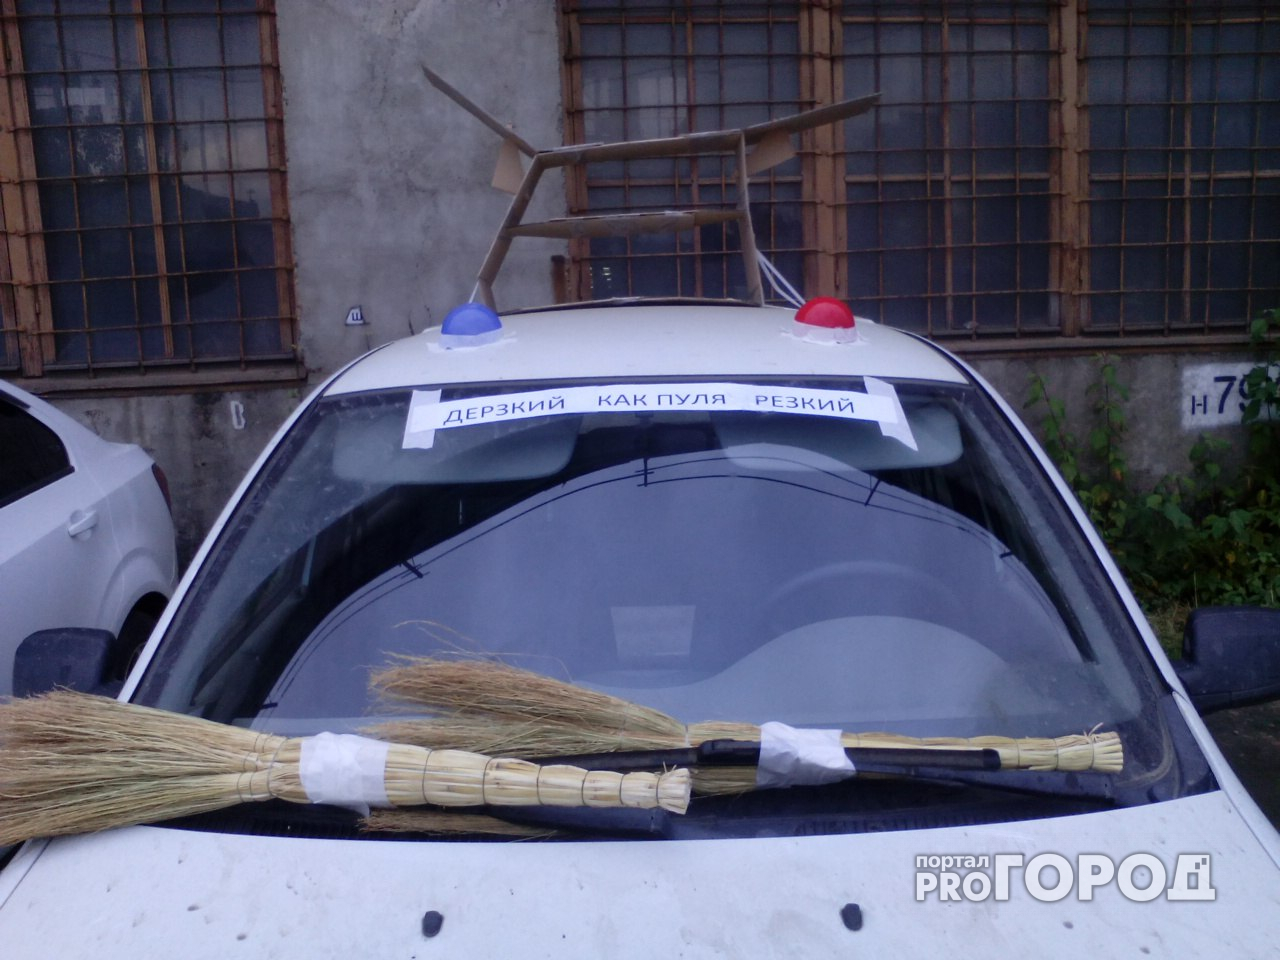 В йошкар-олинской организации сотрудники «подарили» юбиляру авто из мультика «Тачки»